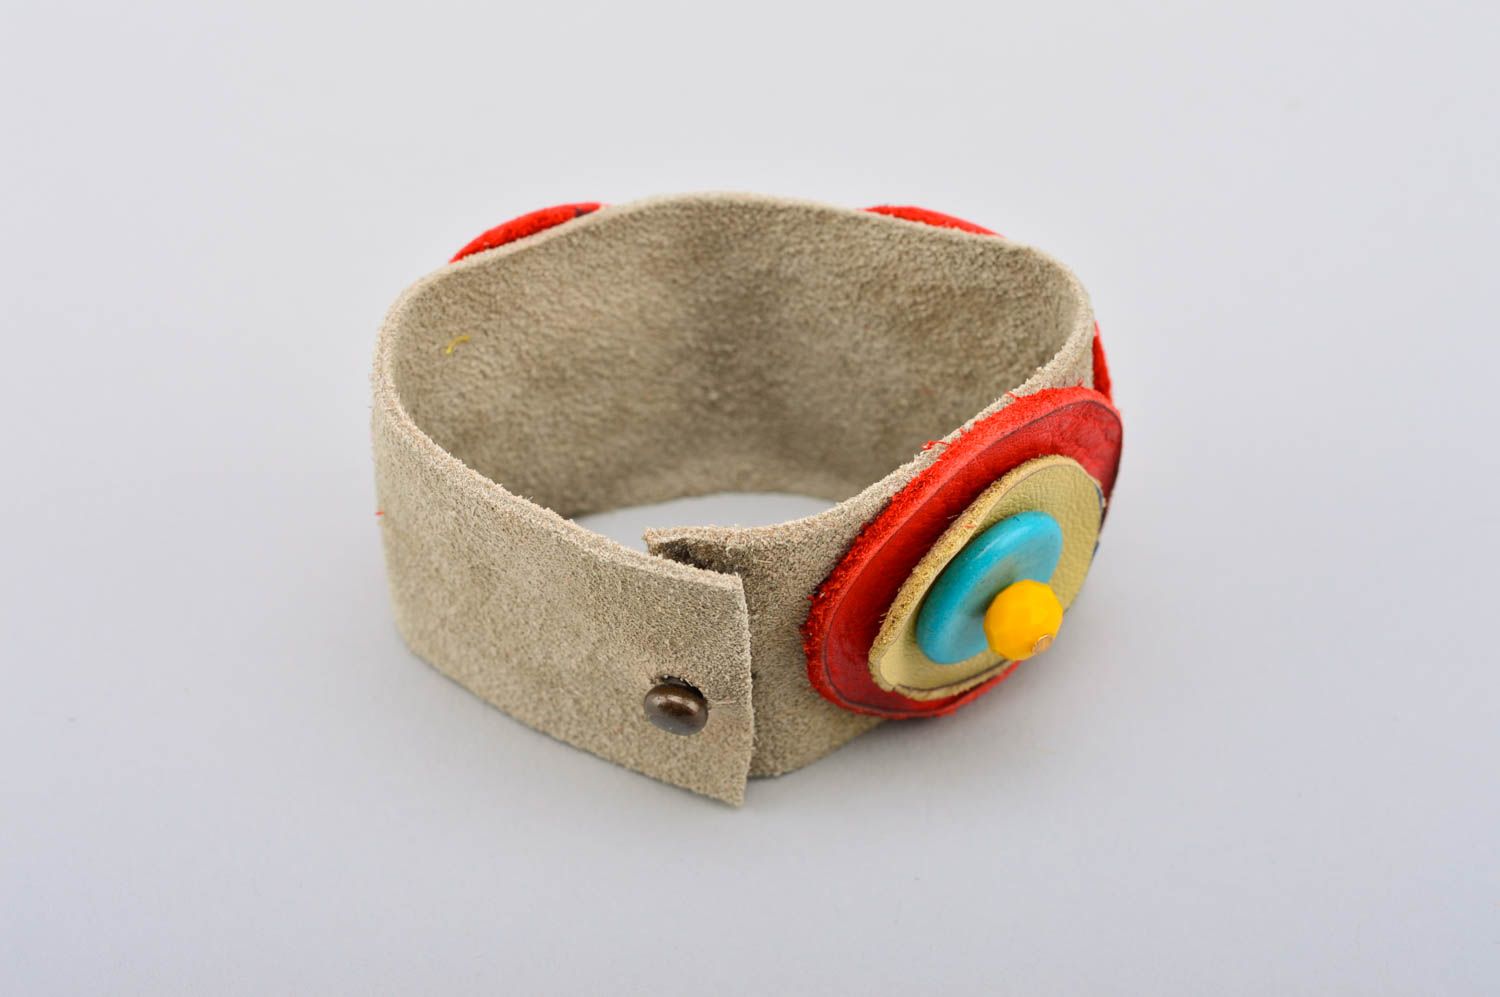 Handmade bracelet designer bracelet leather bracelet unusual jewelry gift ideas photo 5